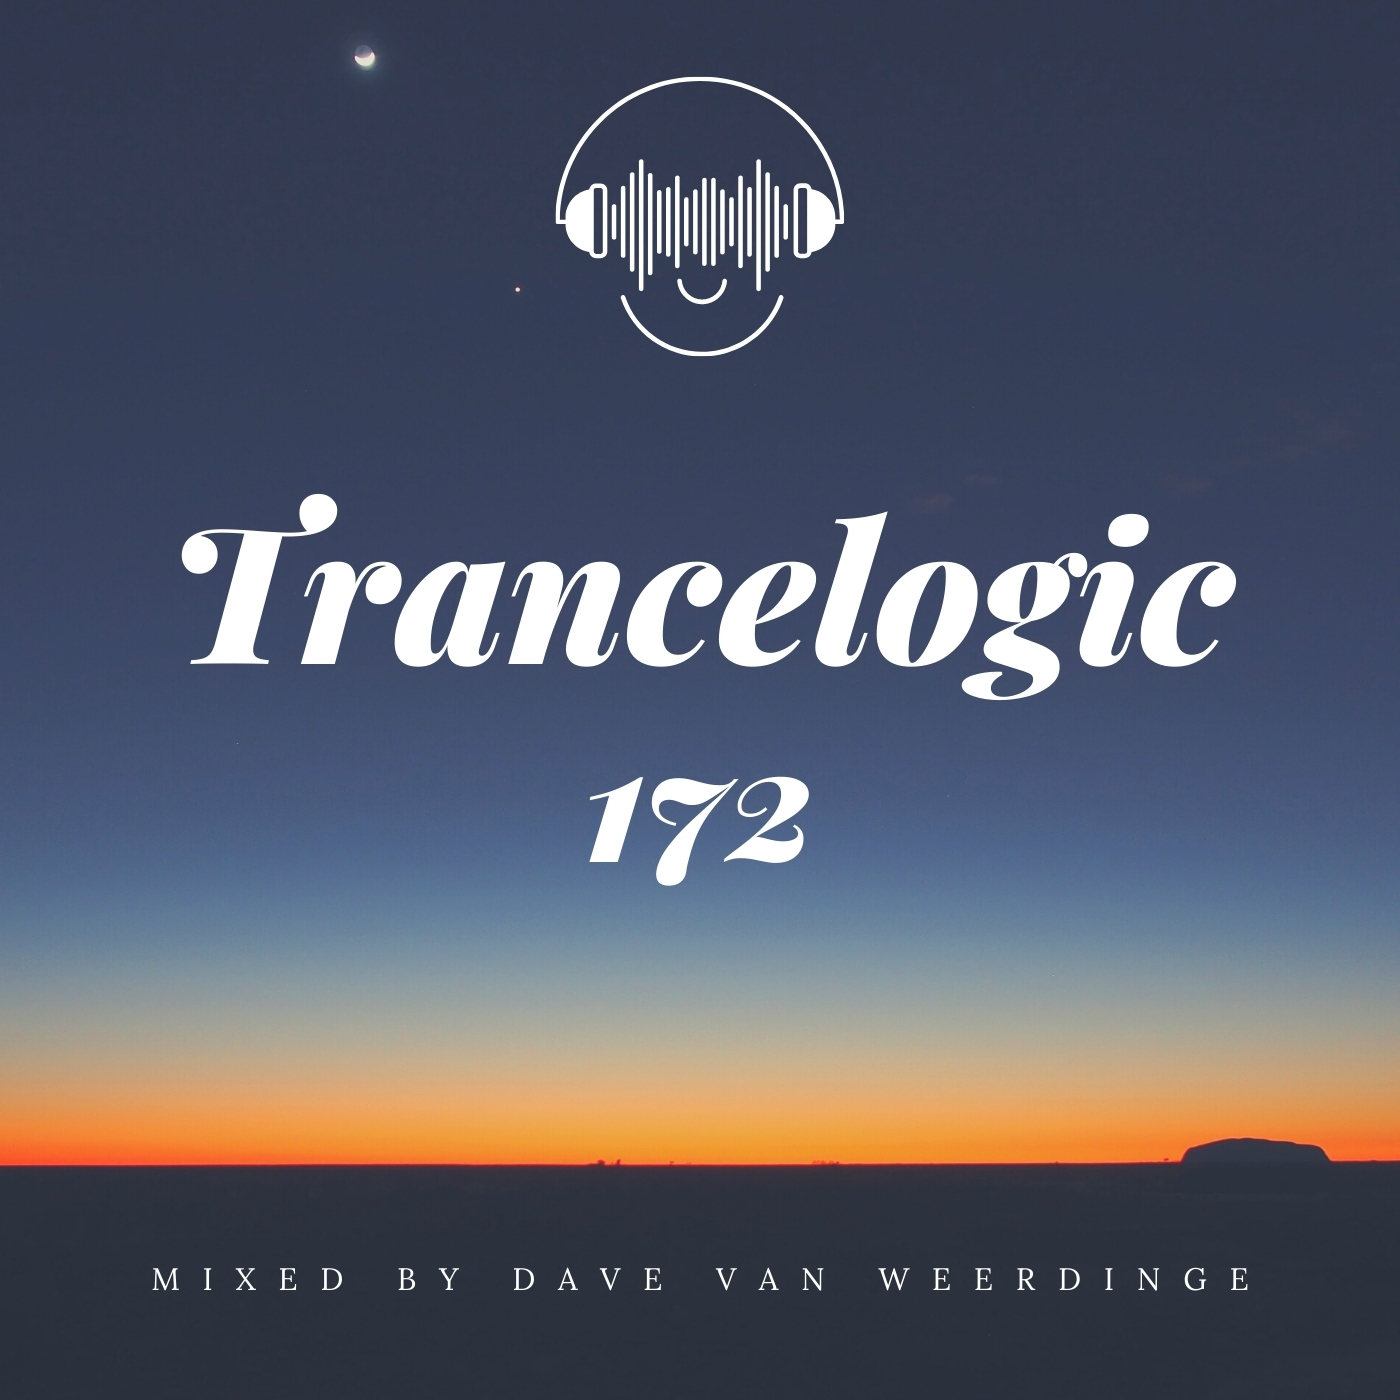 Trancelogic 172 by Dave van Weerdinge